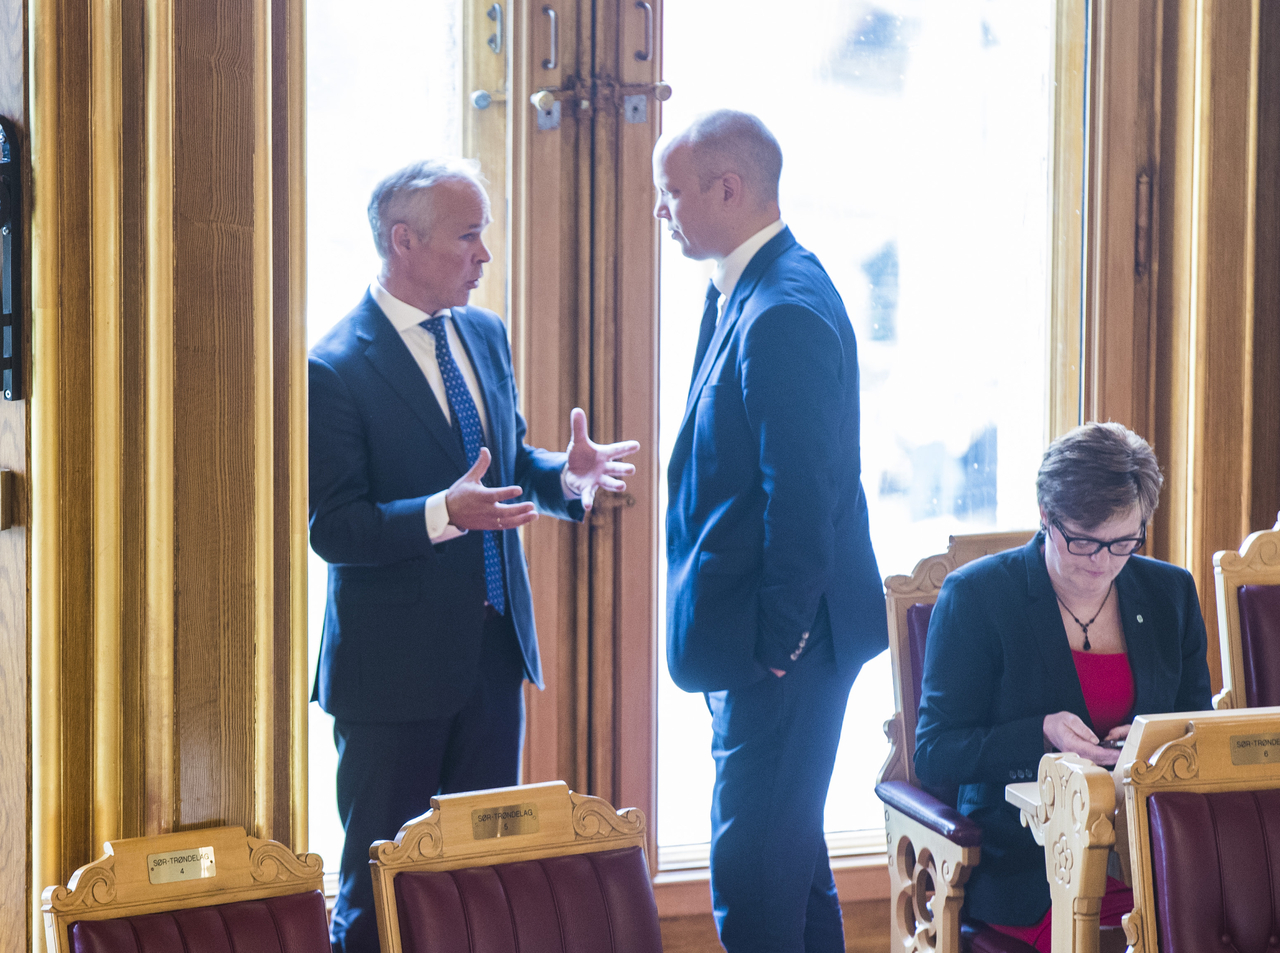 Kommunalminister Jan Tore Sanner (H) i samtale med Sp-leder Trygve Slagsvold Vedum (til høyre) i Stortinget. Foto: Vidar Ruud / NTB scanpix